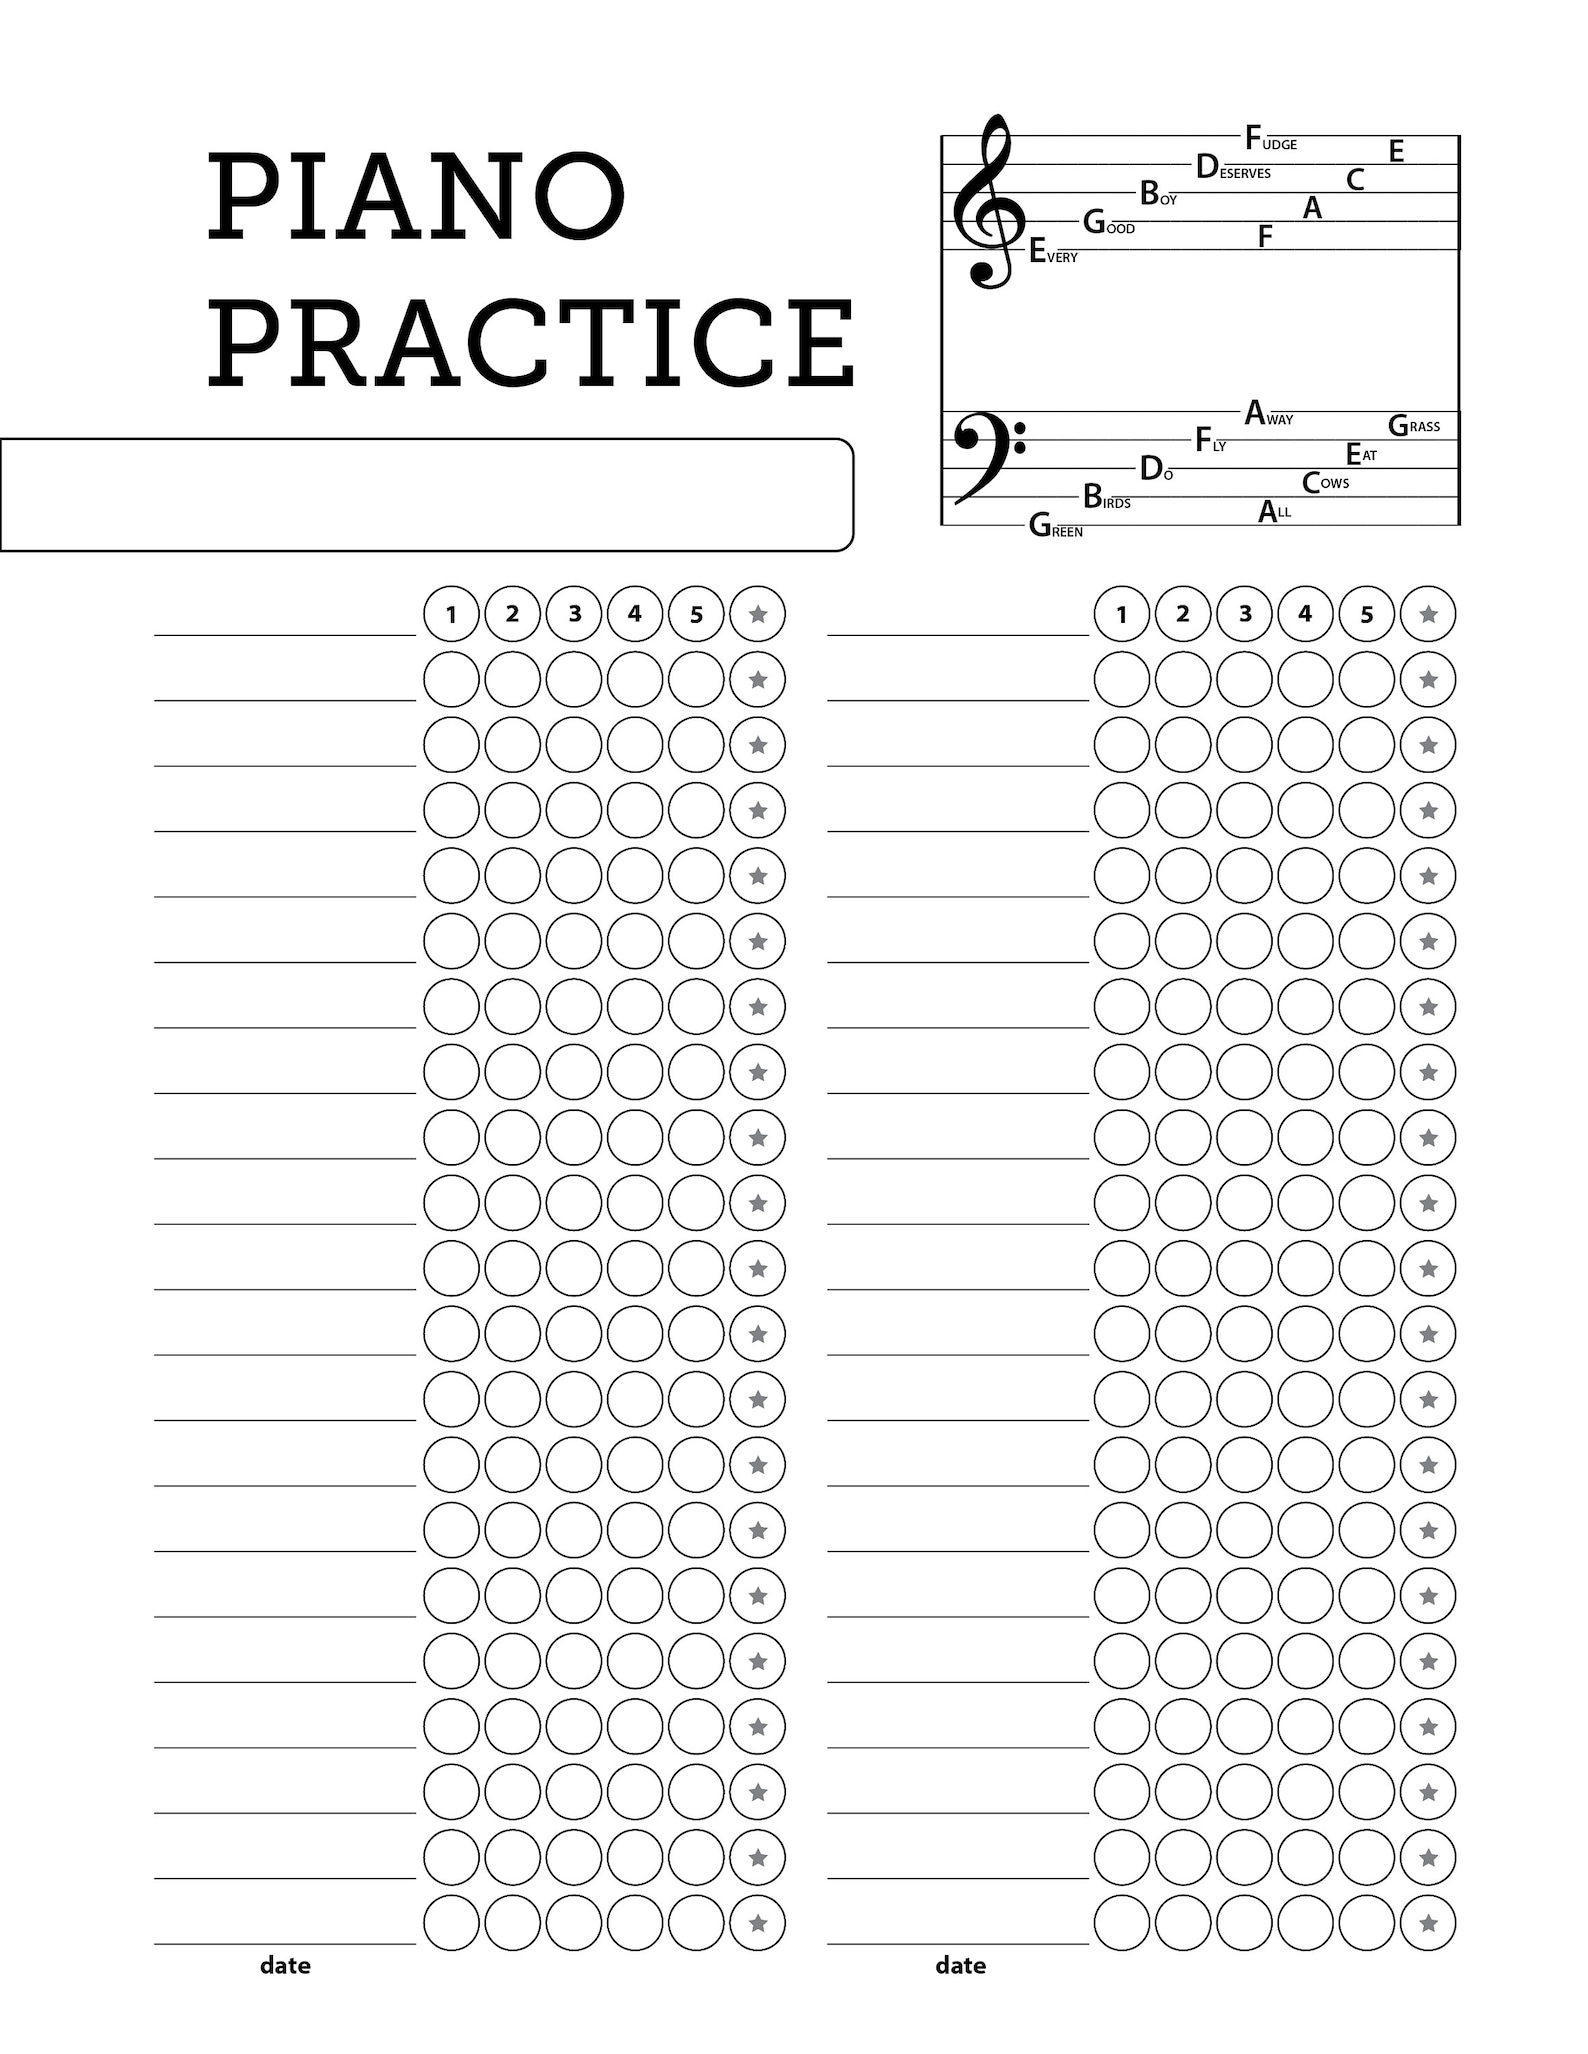 piano-practice-chart-printable-digital-download-etsy